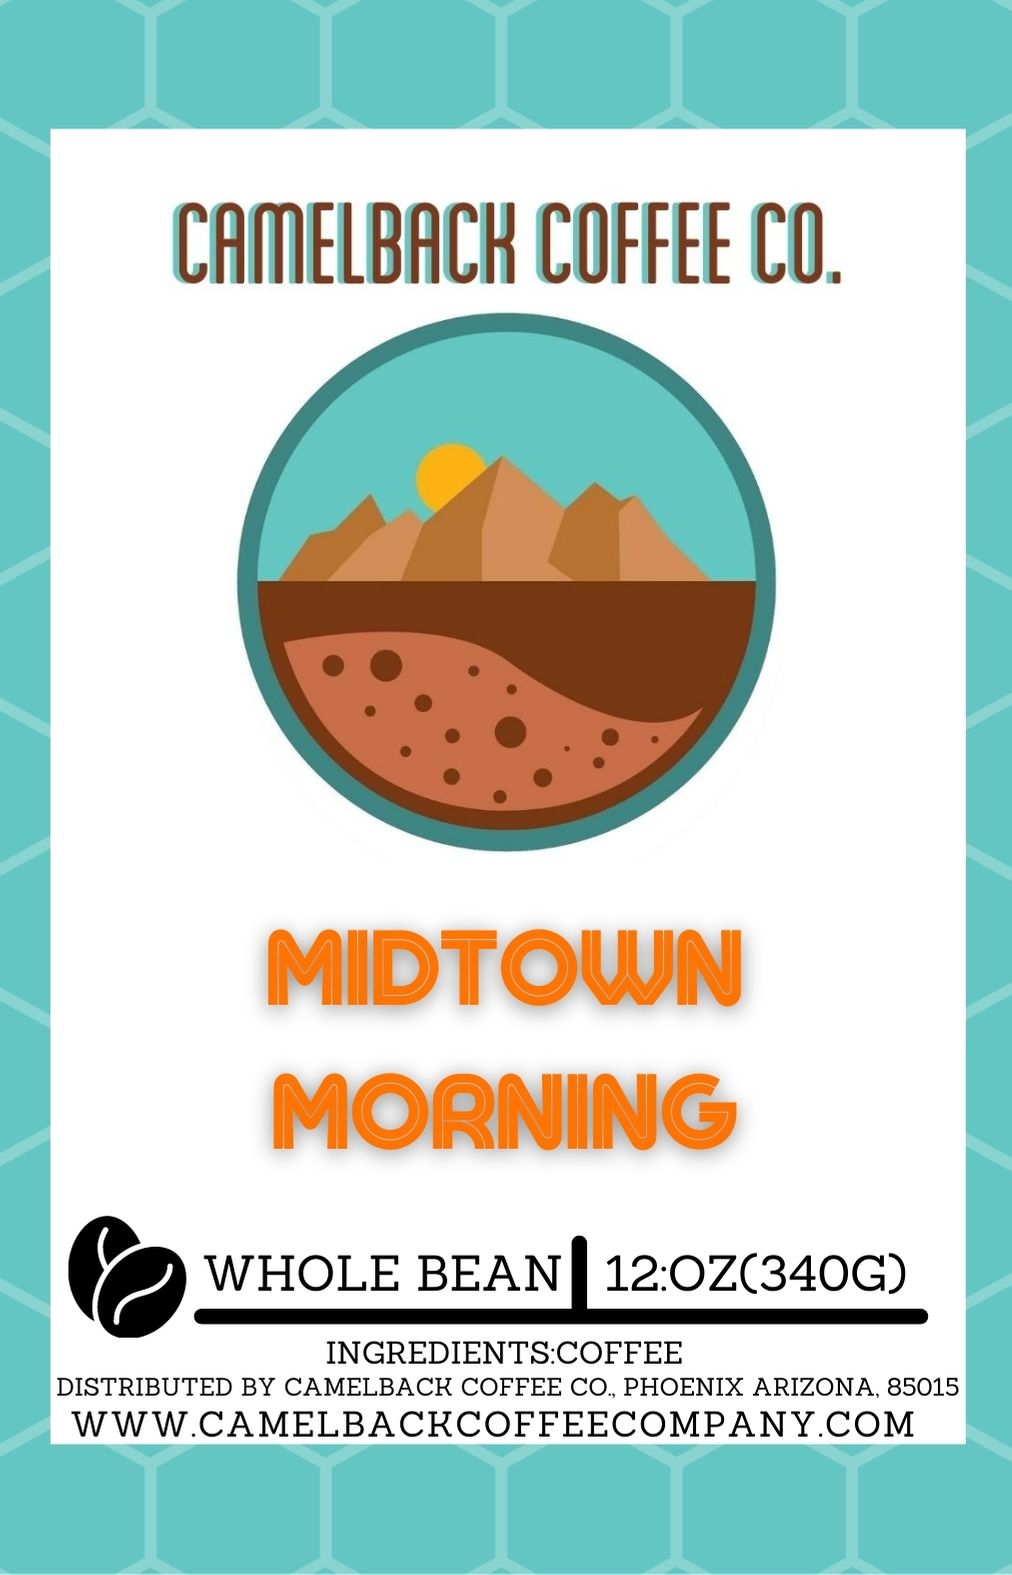 Midtown Morning - Camelback Coffee